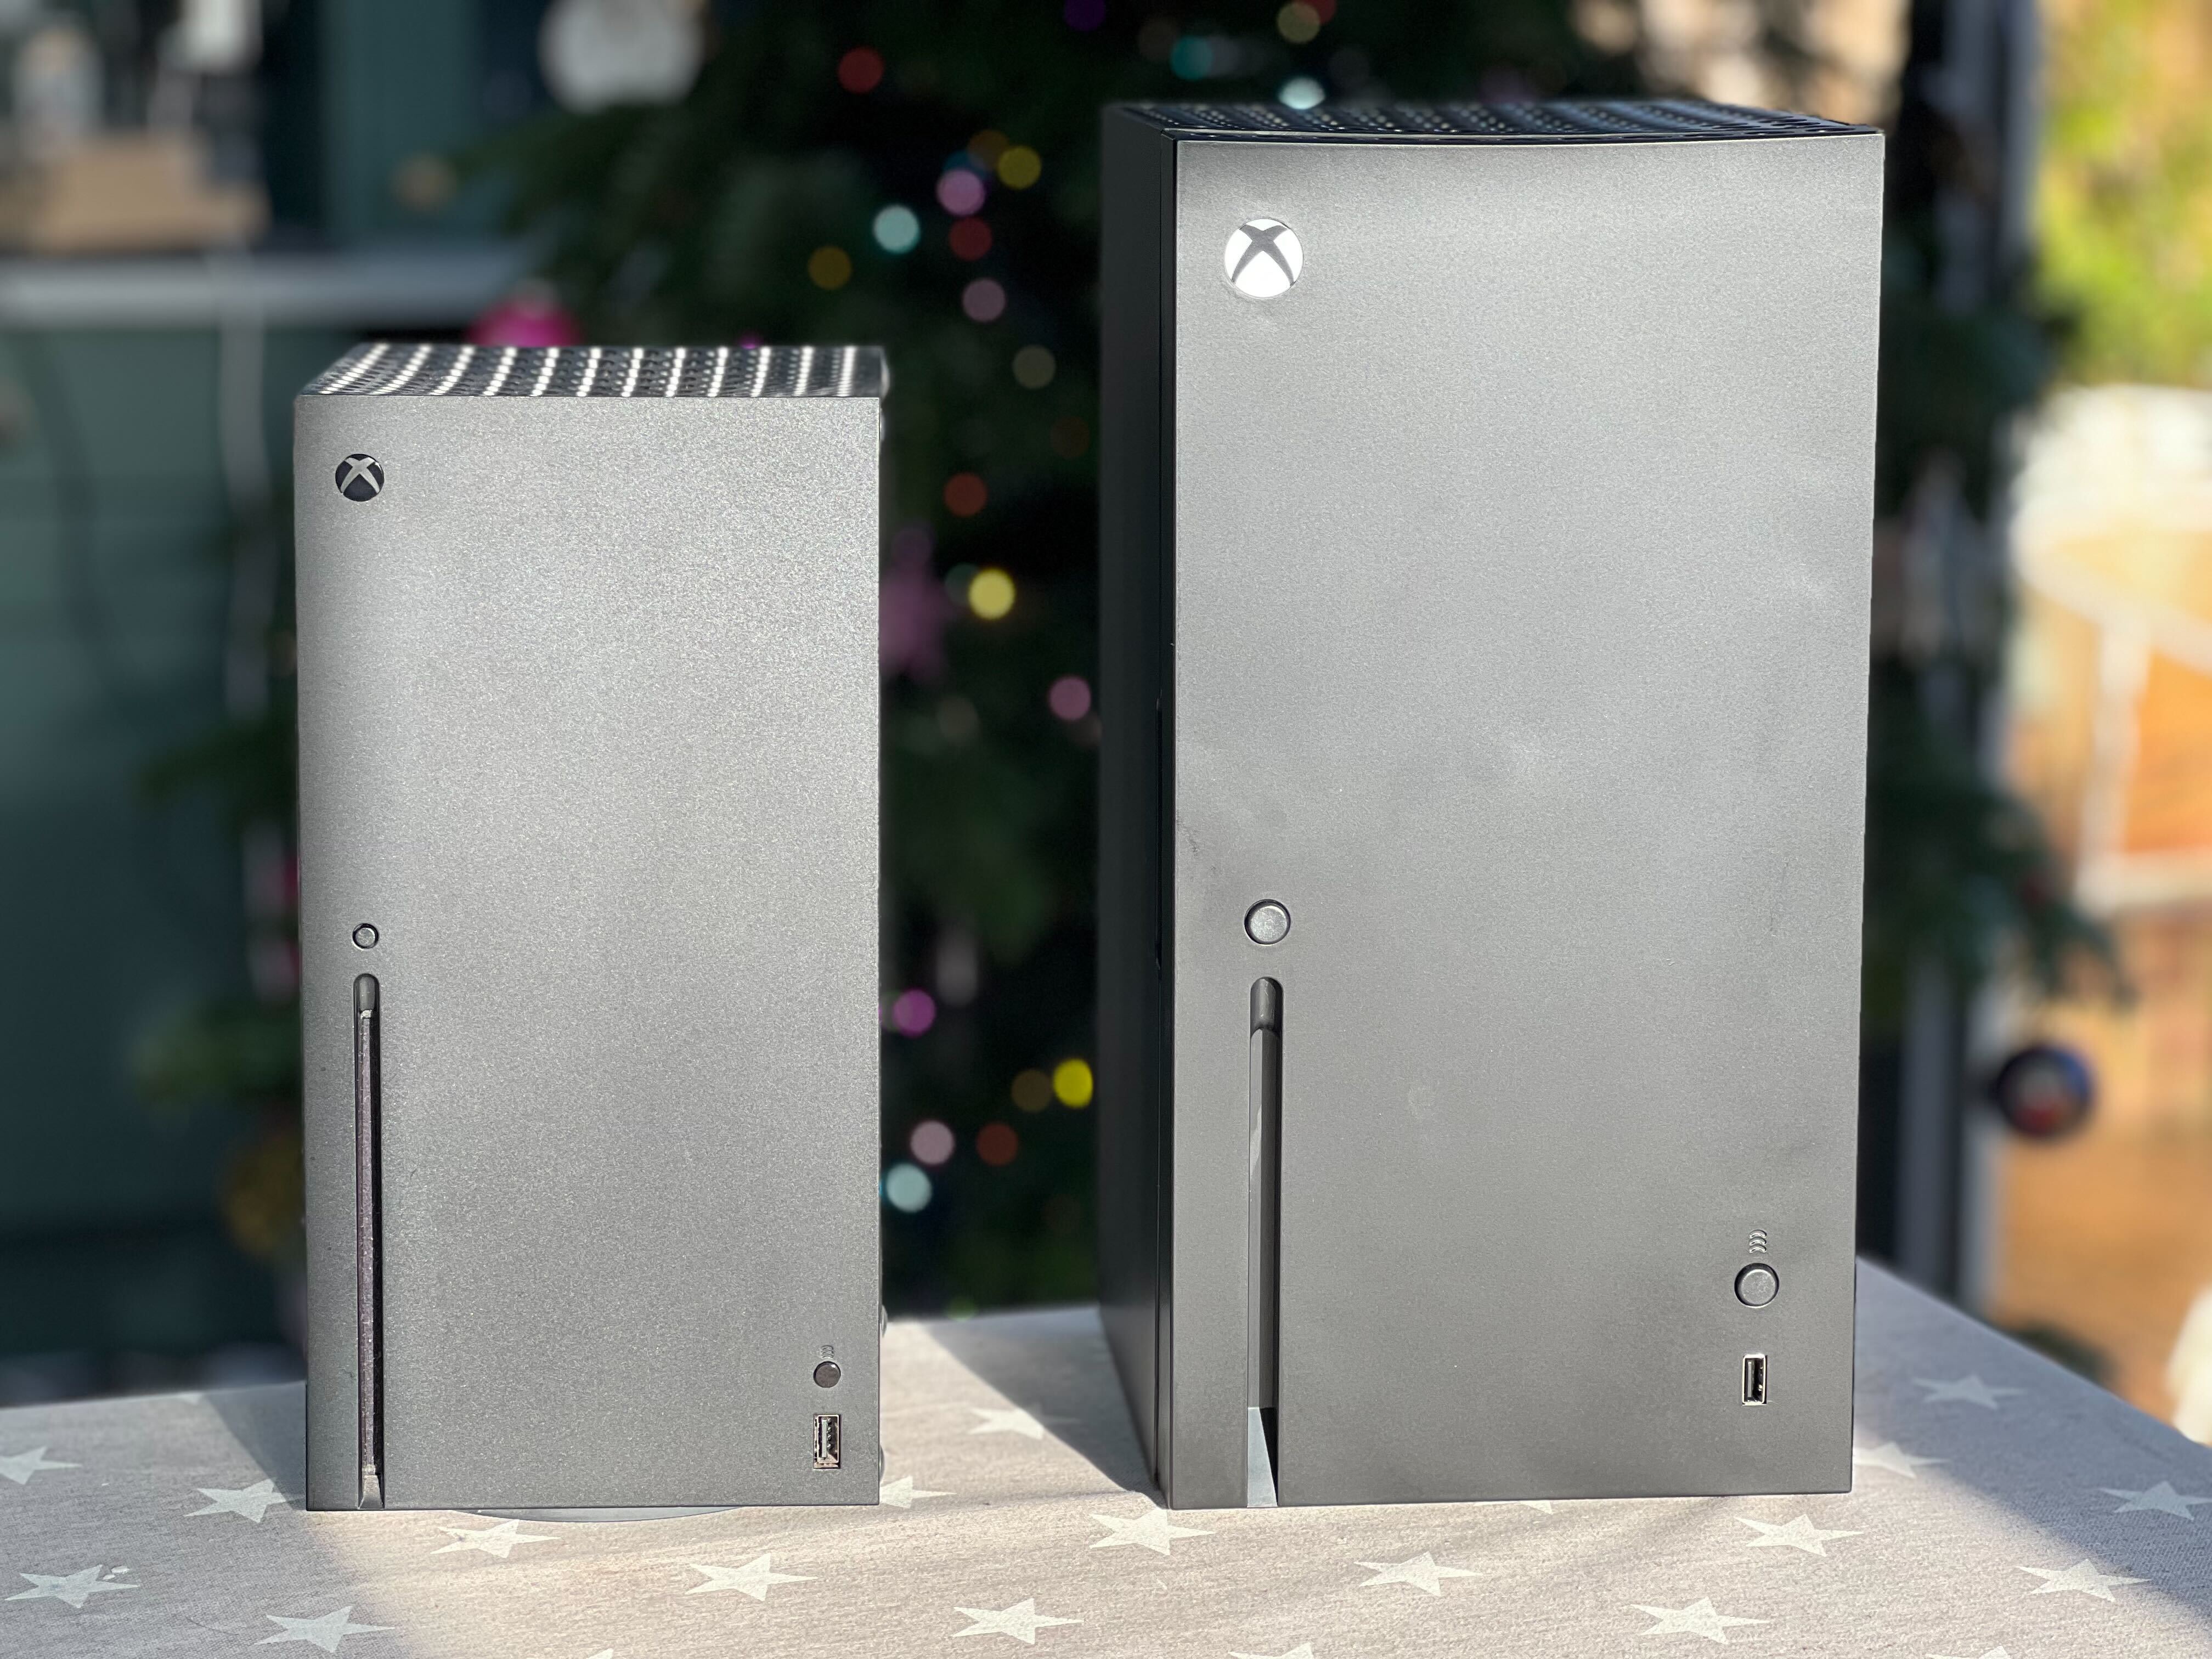 Microsoft's Xbox Series X Mini Fridge Is Real, Velocity Cooled And